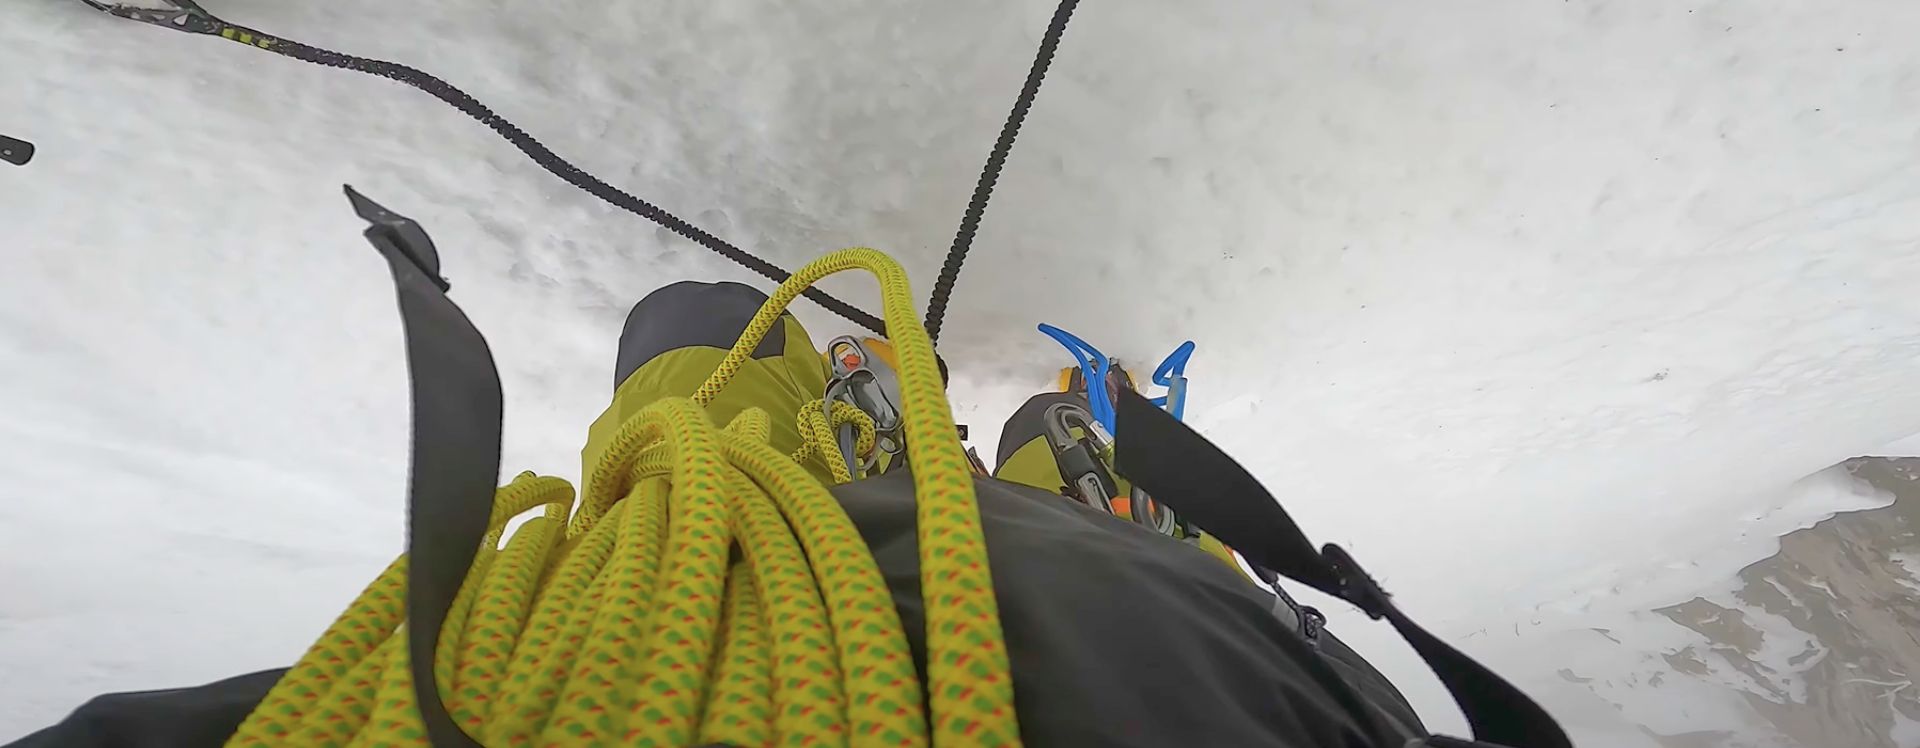 Test corde escalade Tendon Alpine 